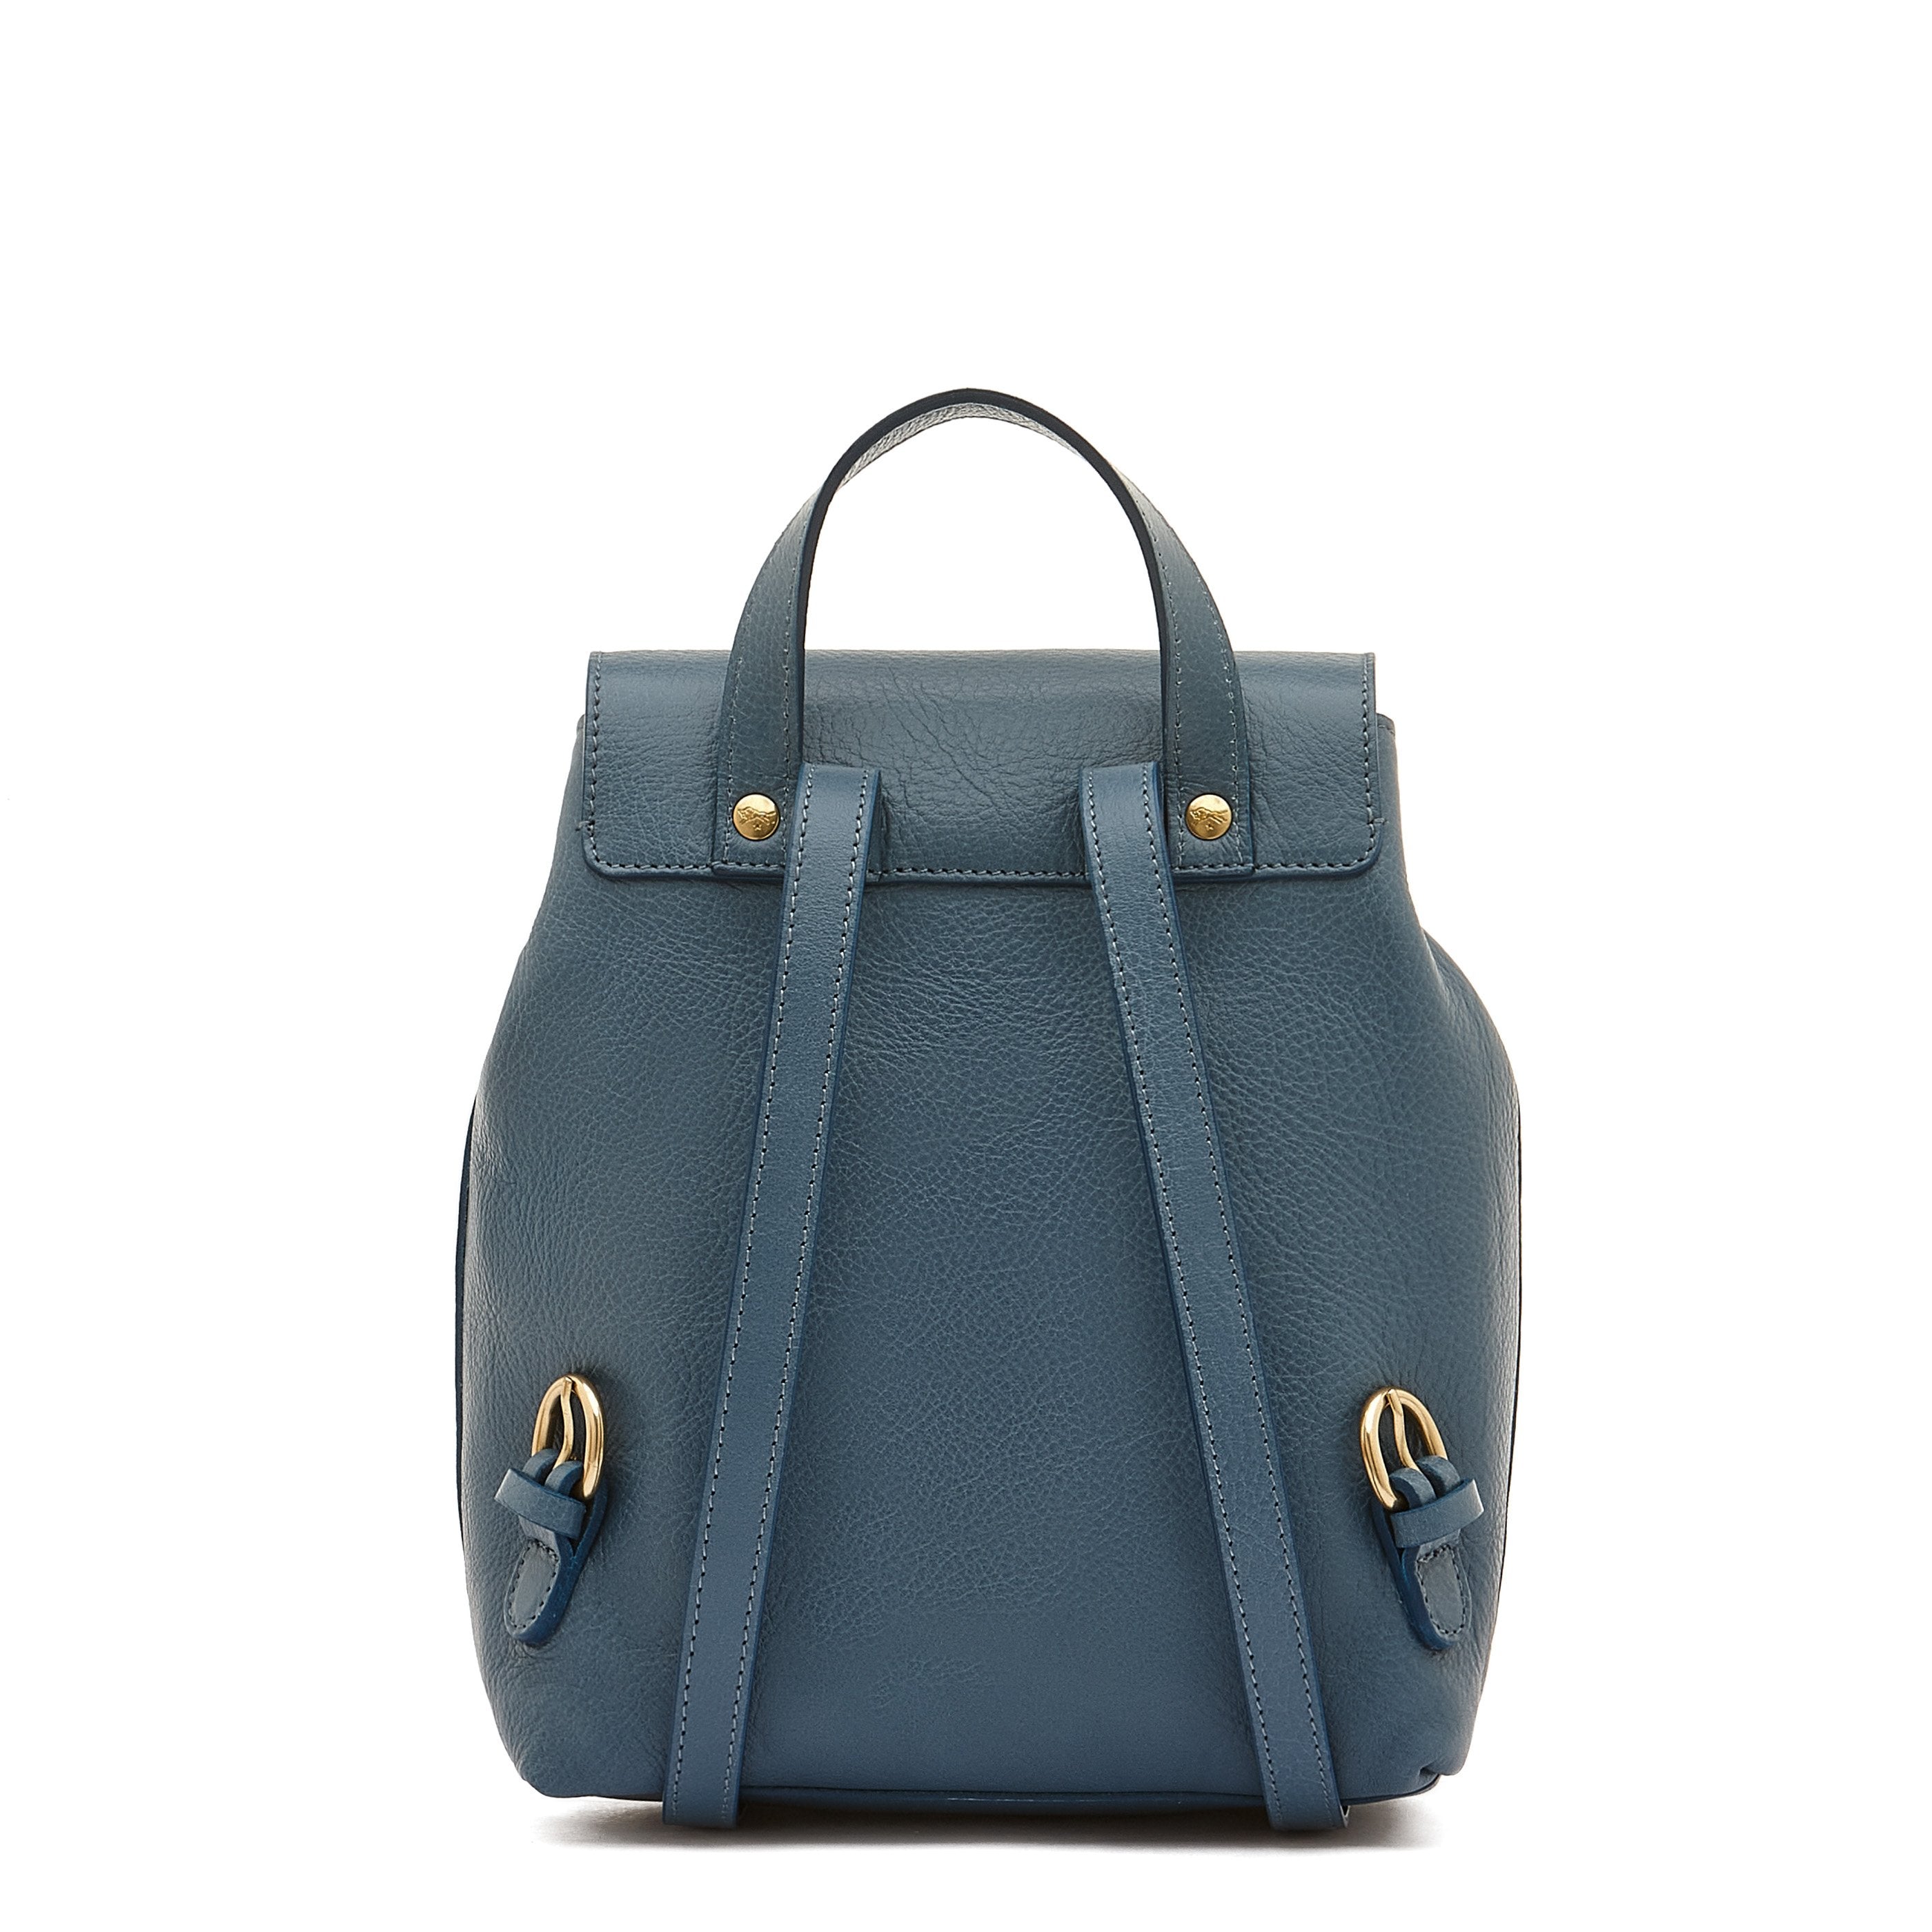 Mezzomonte | Women's backpack in leather color blue denim